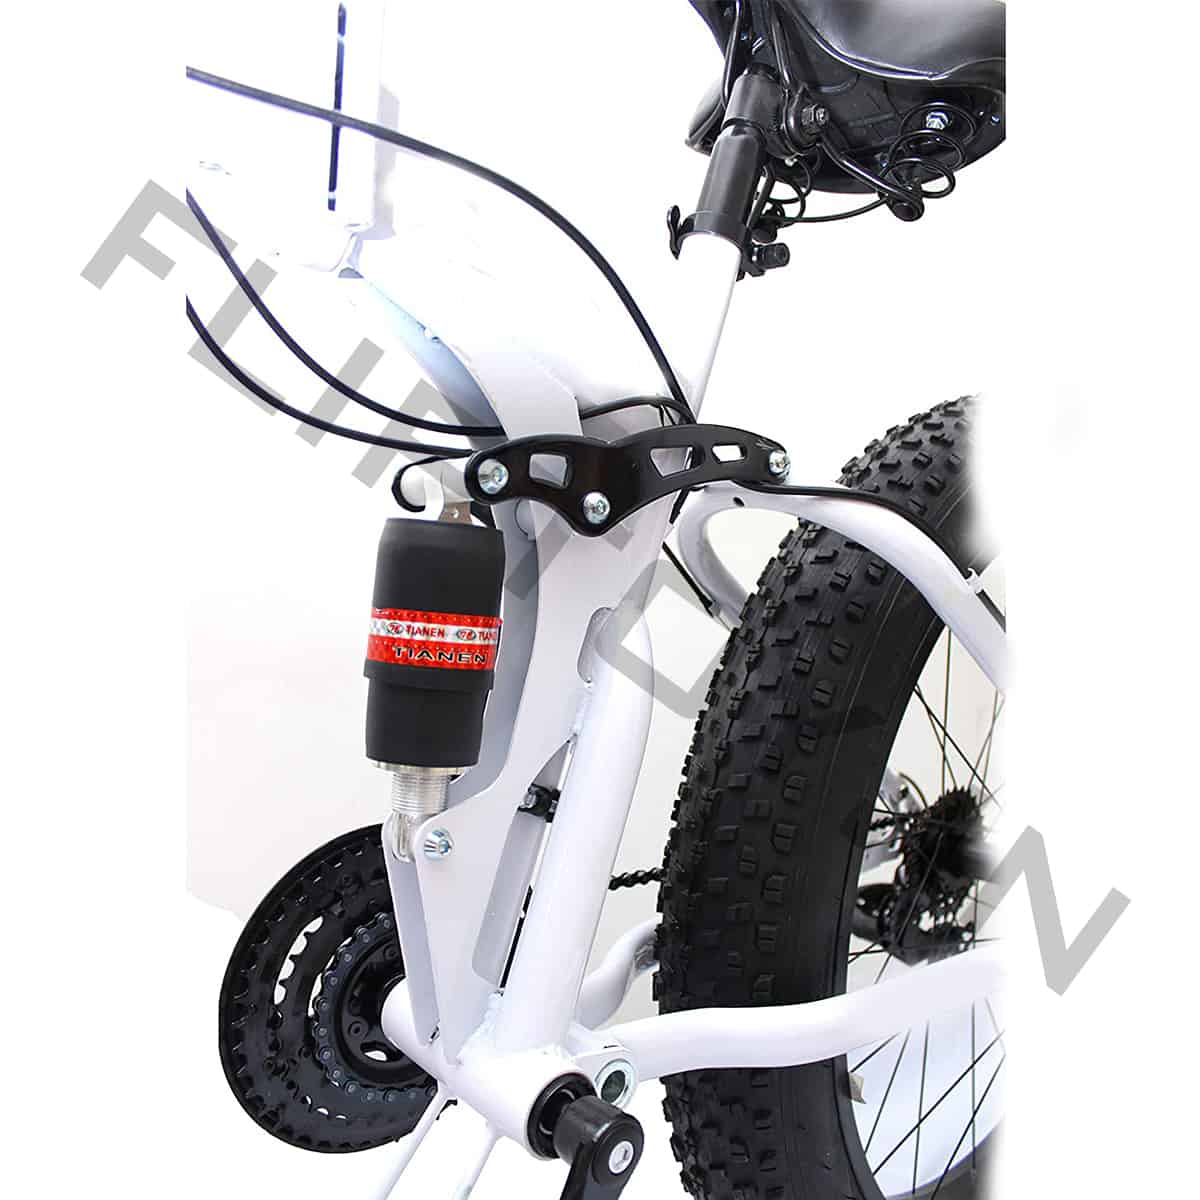 Foldable| Fat Tyre Mountain Cycle|Shimano,21 Speed Gears|26T fat tyre bike